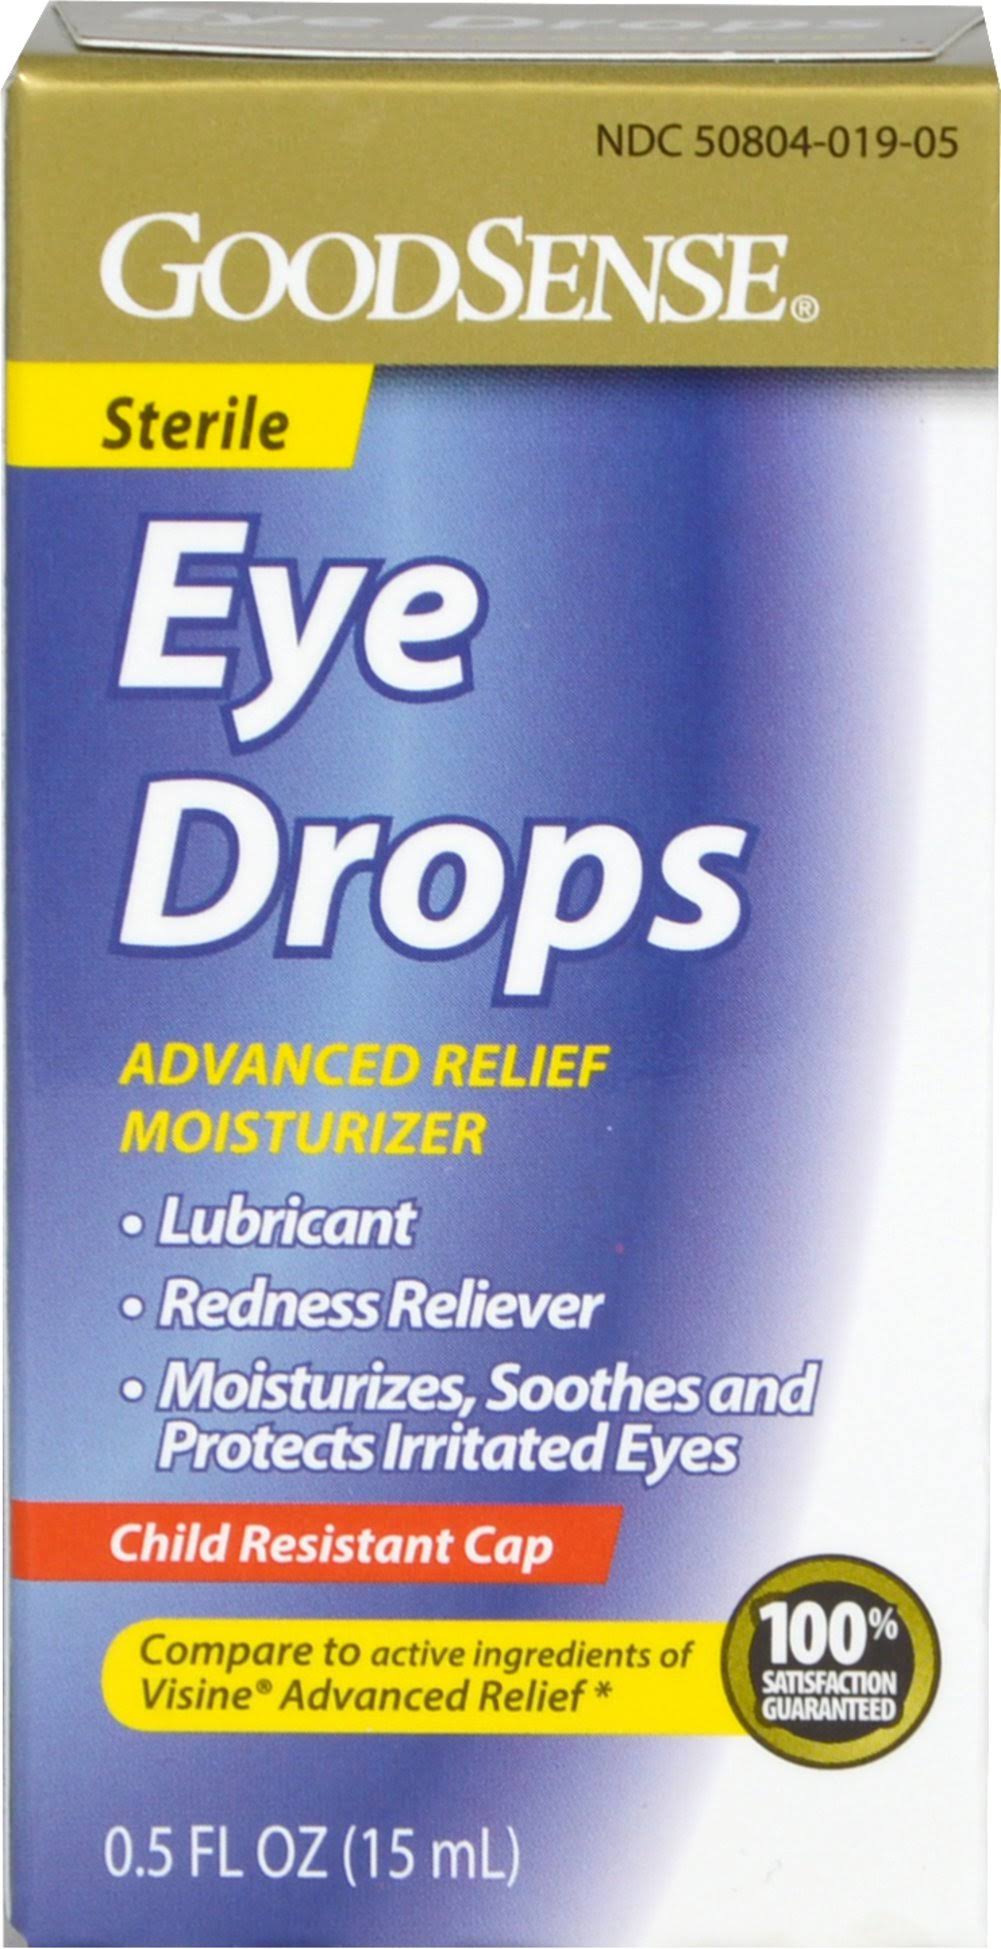 Good Sense Advanced Relief Moisturizer Eye Drops - 15ml